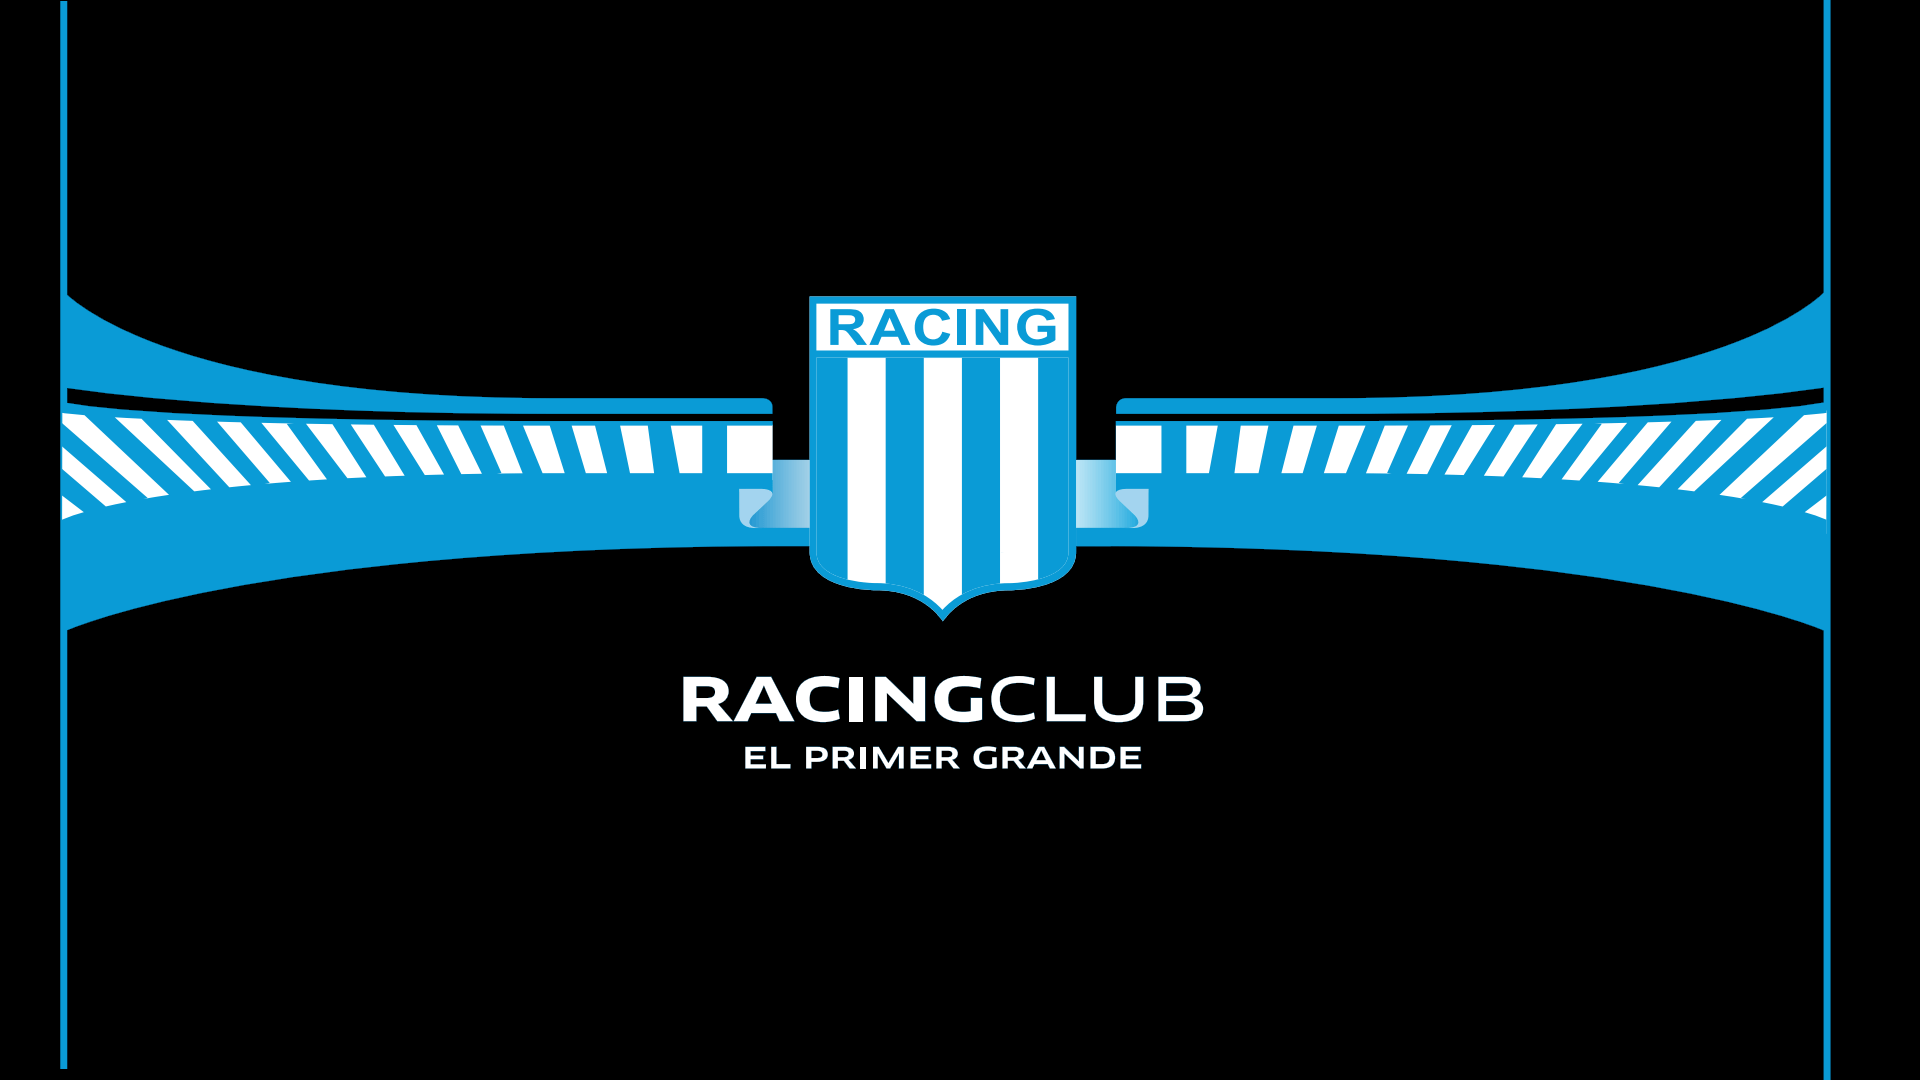 Racing Club De Avellaneda Fondos Escudo Image Race Tab Auto